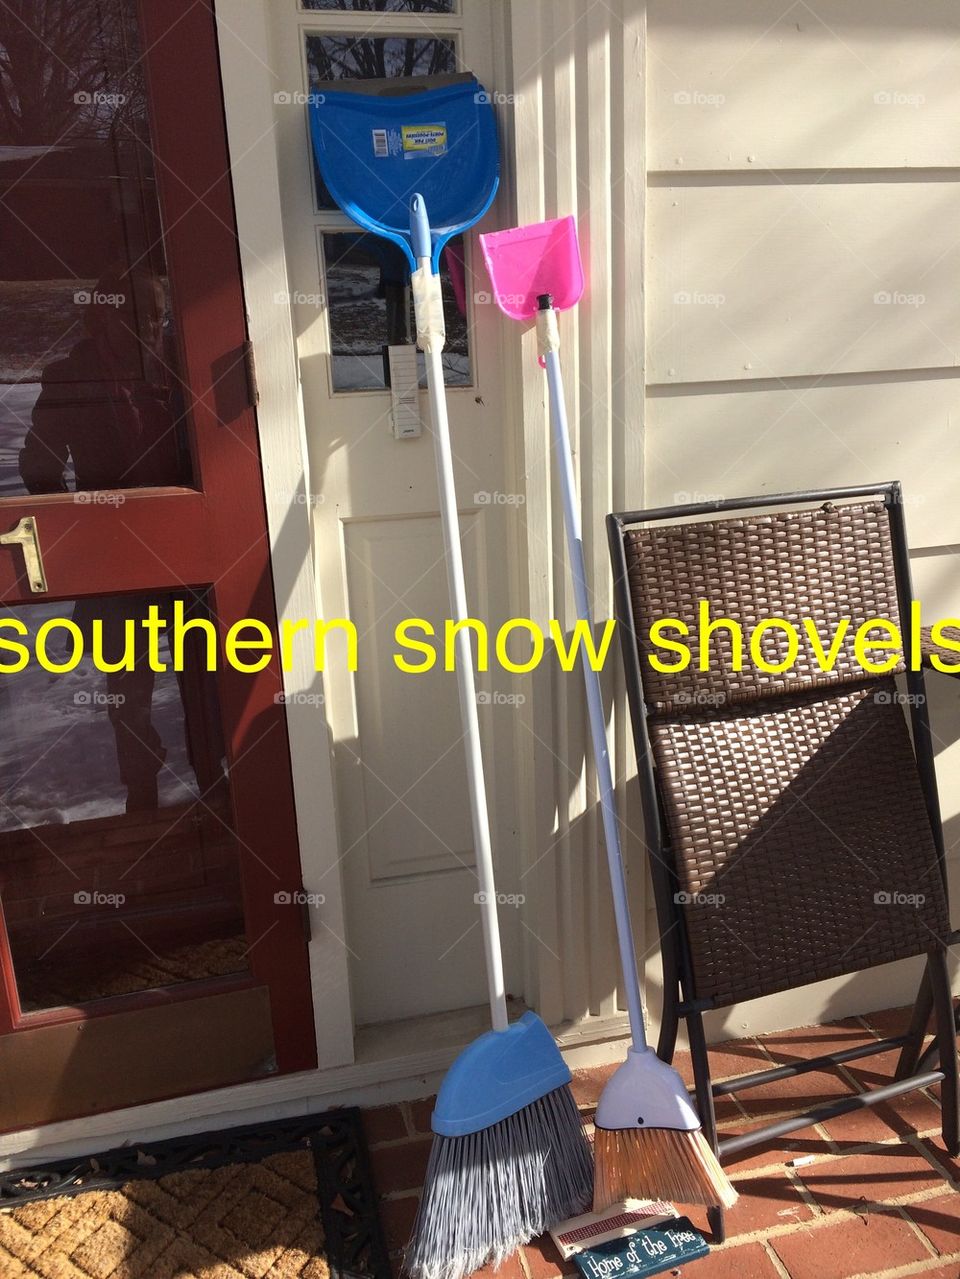 Southern snow shovel